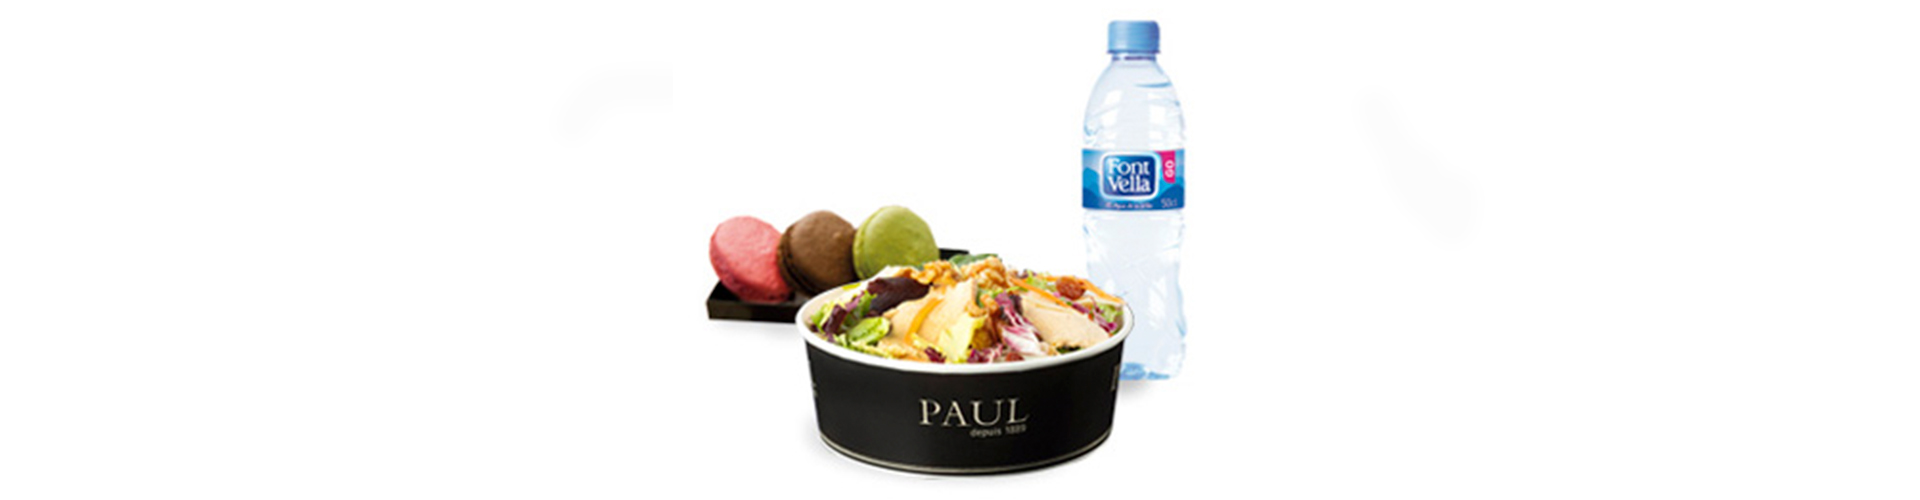 Menu-salad-foodpaulbcnt1-40003090